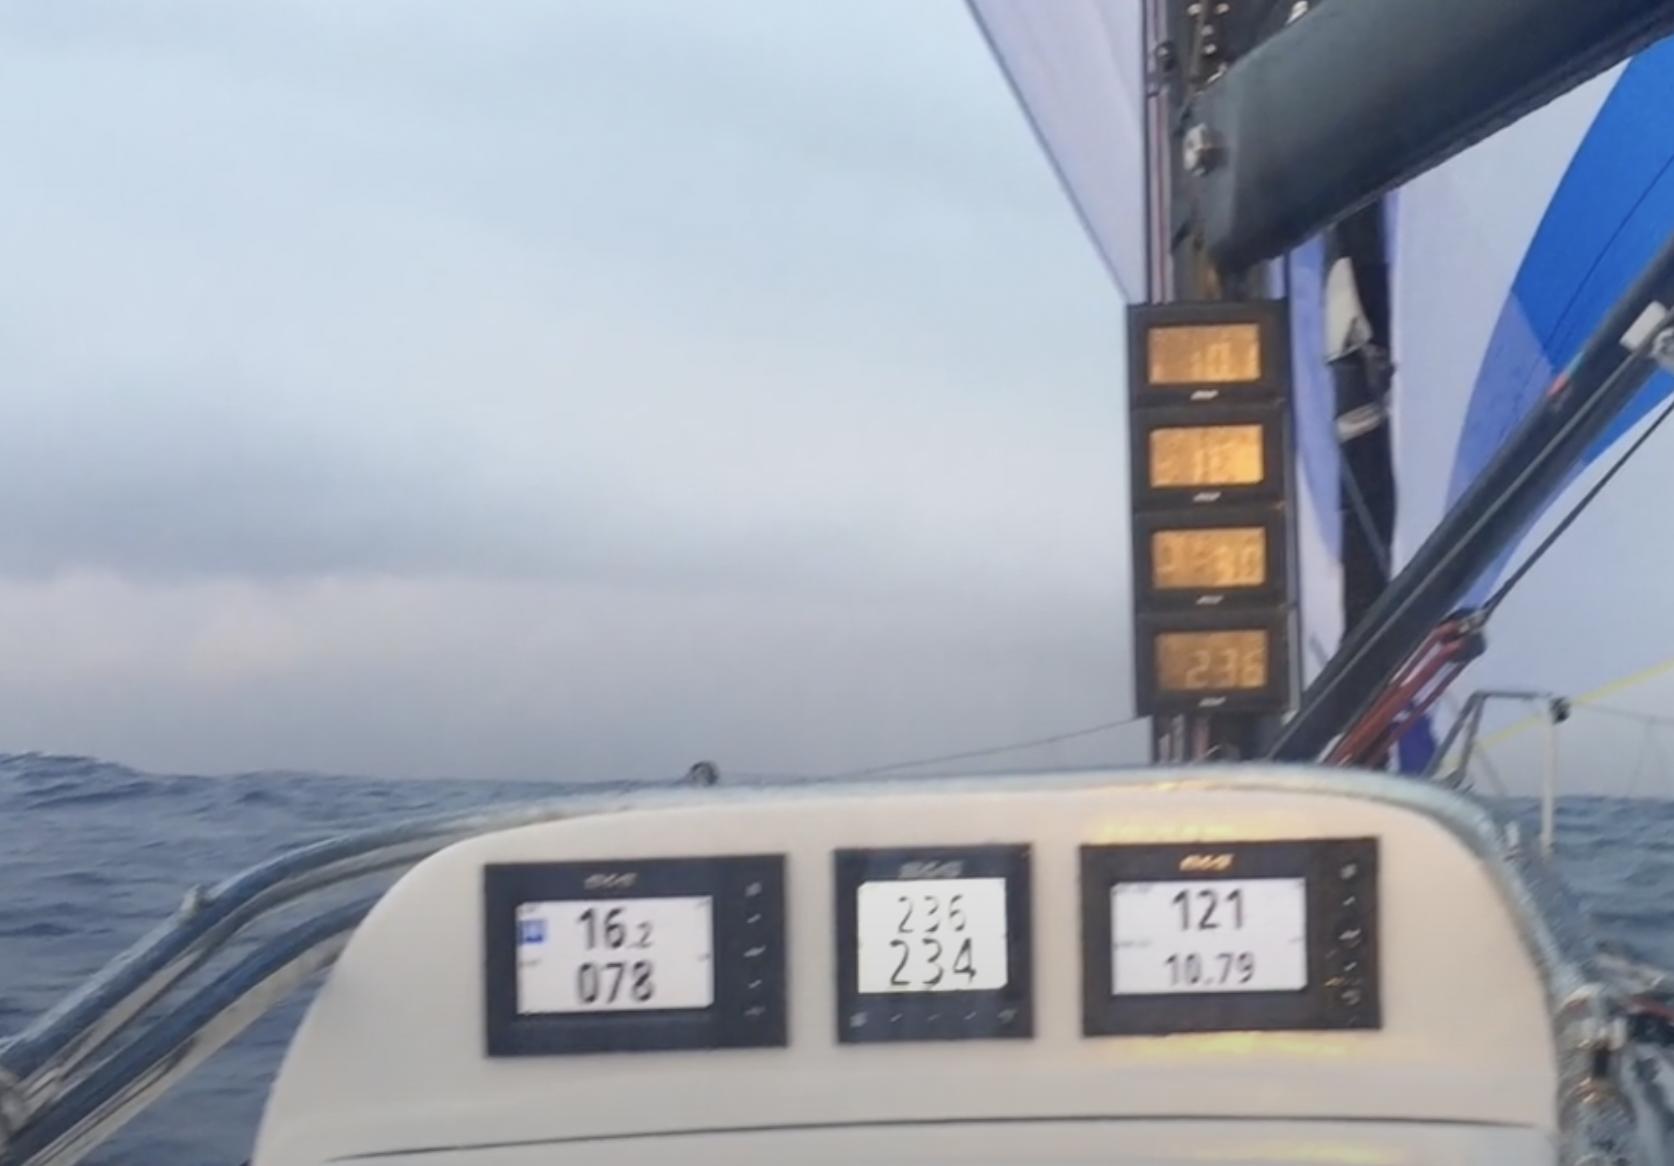 Boat speed 16 + knots TP 2019